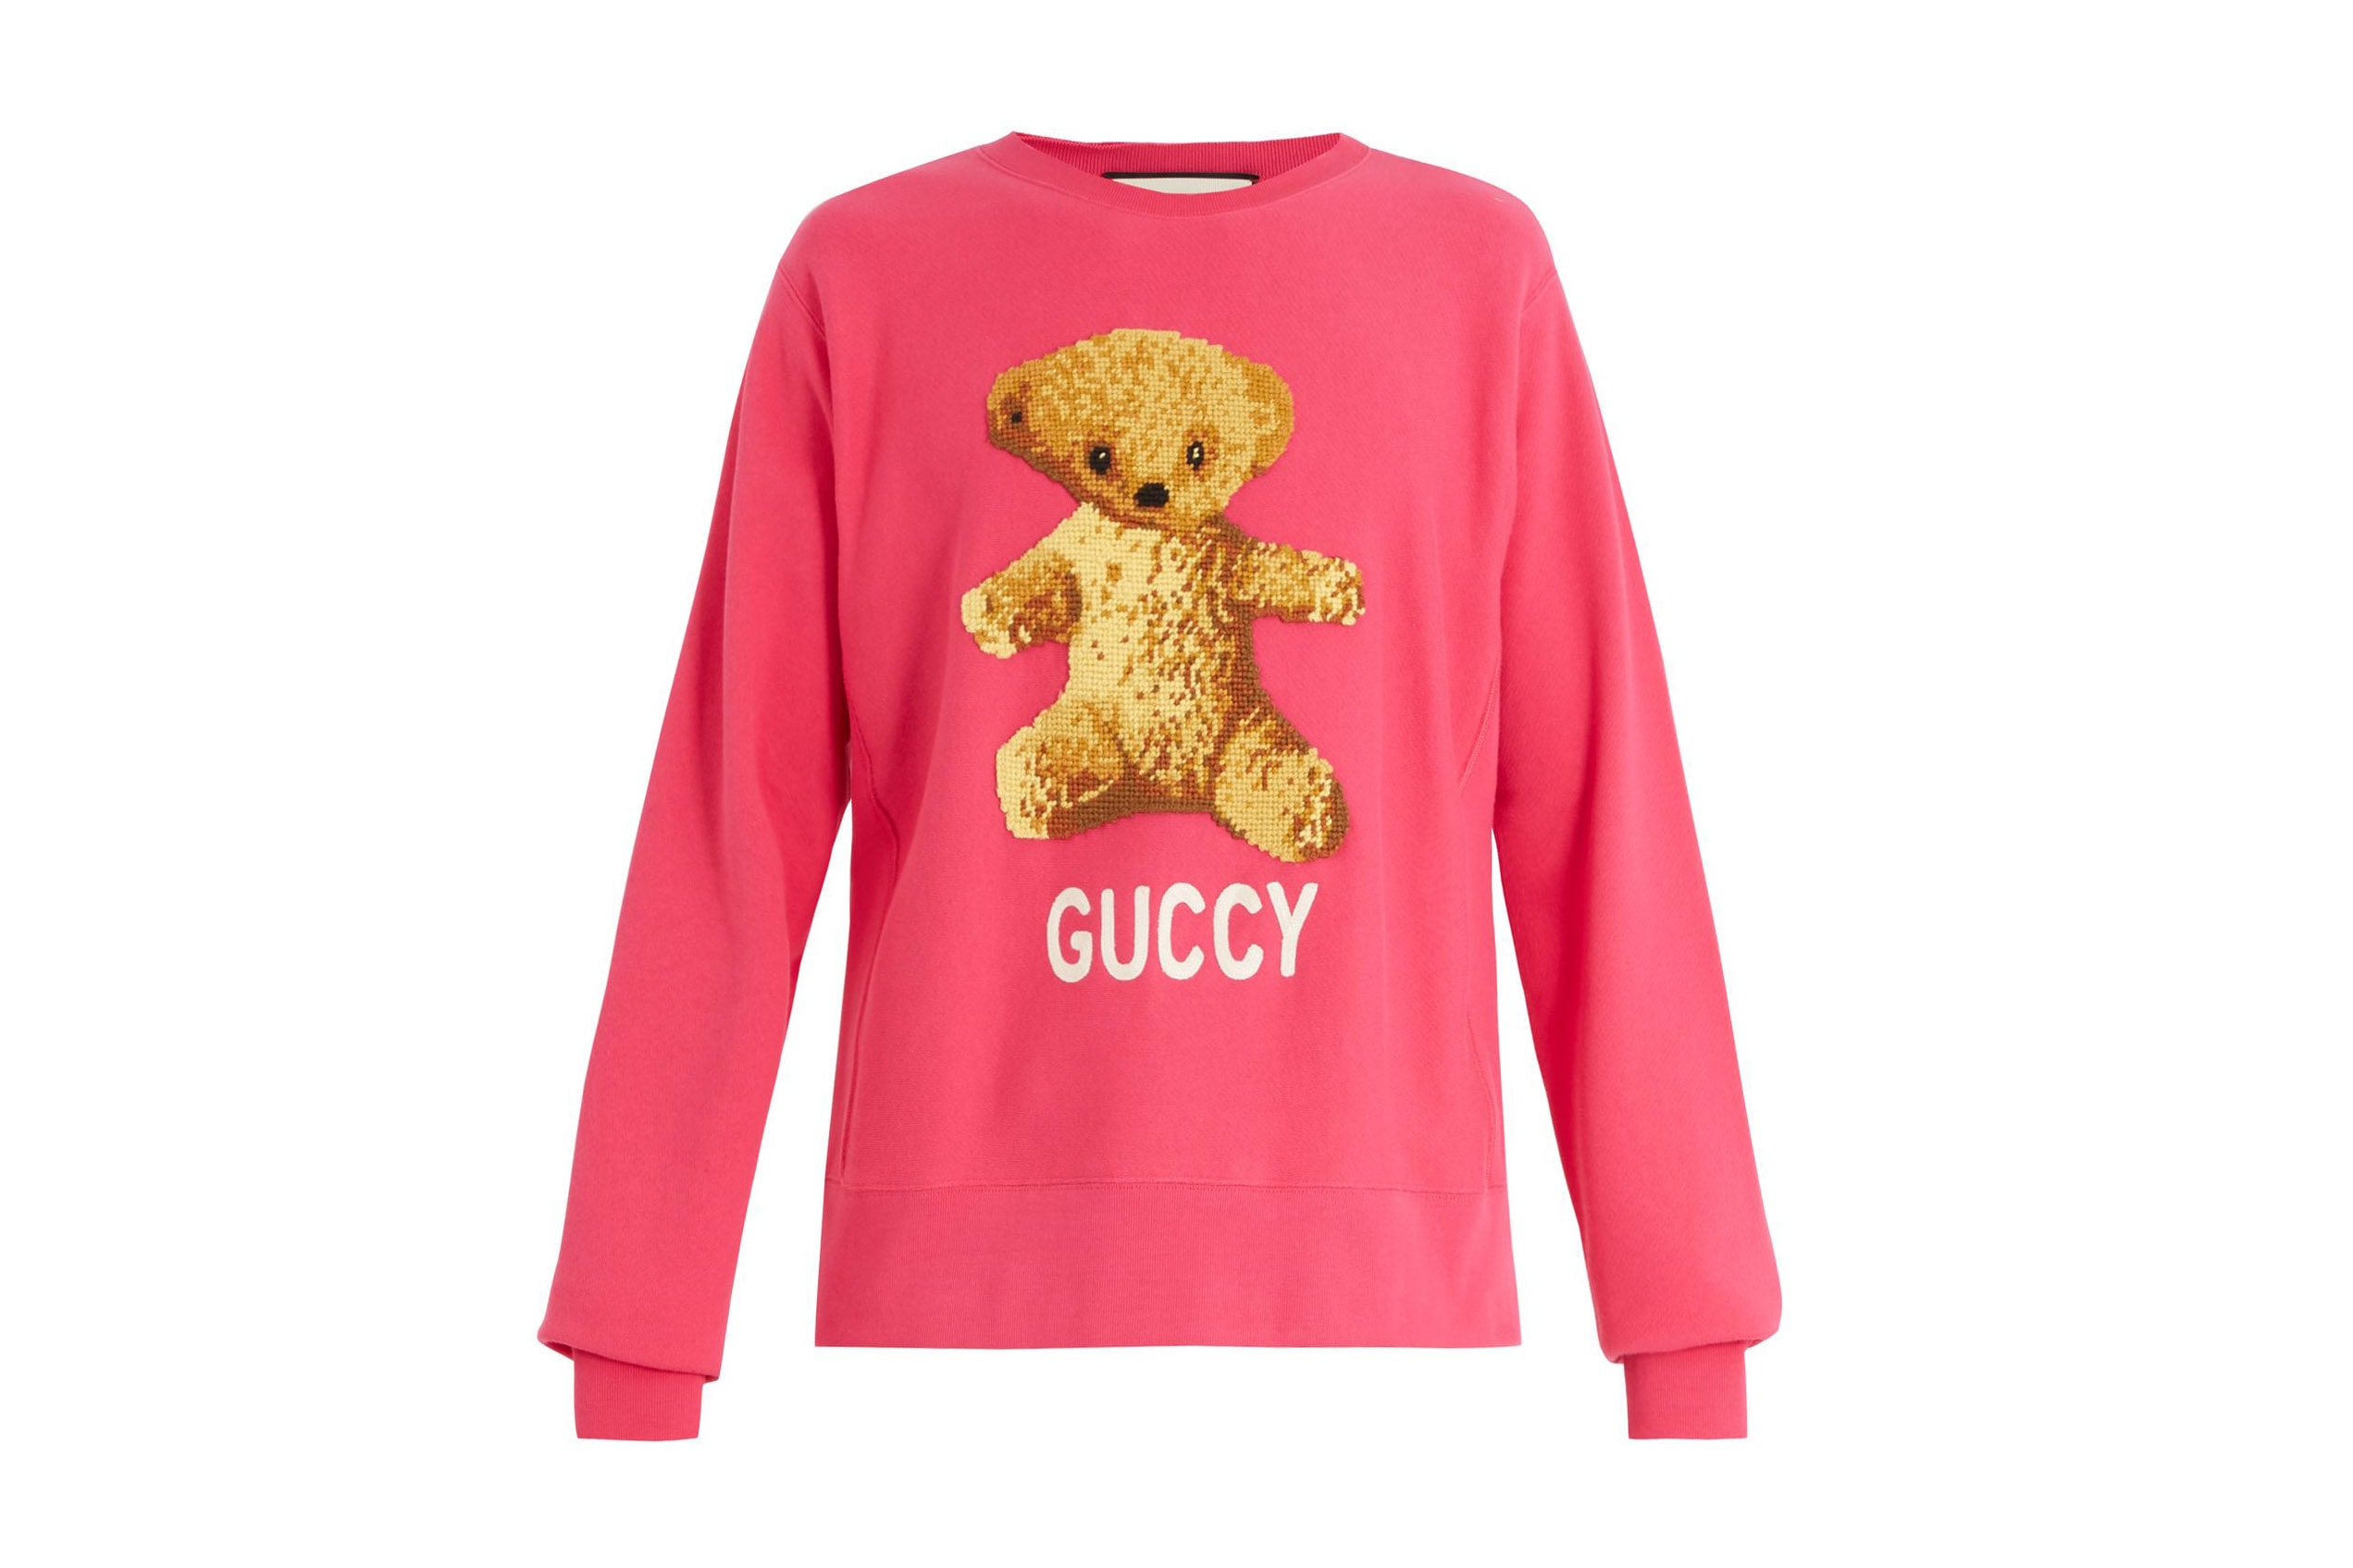 Gucci Bootleg Guccy Printed Sweatshirts Snake Luxury Sweater Teddy Bear Cozy